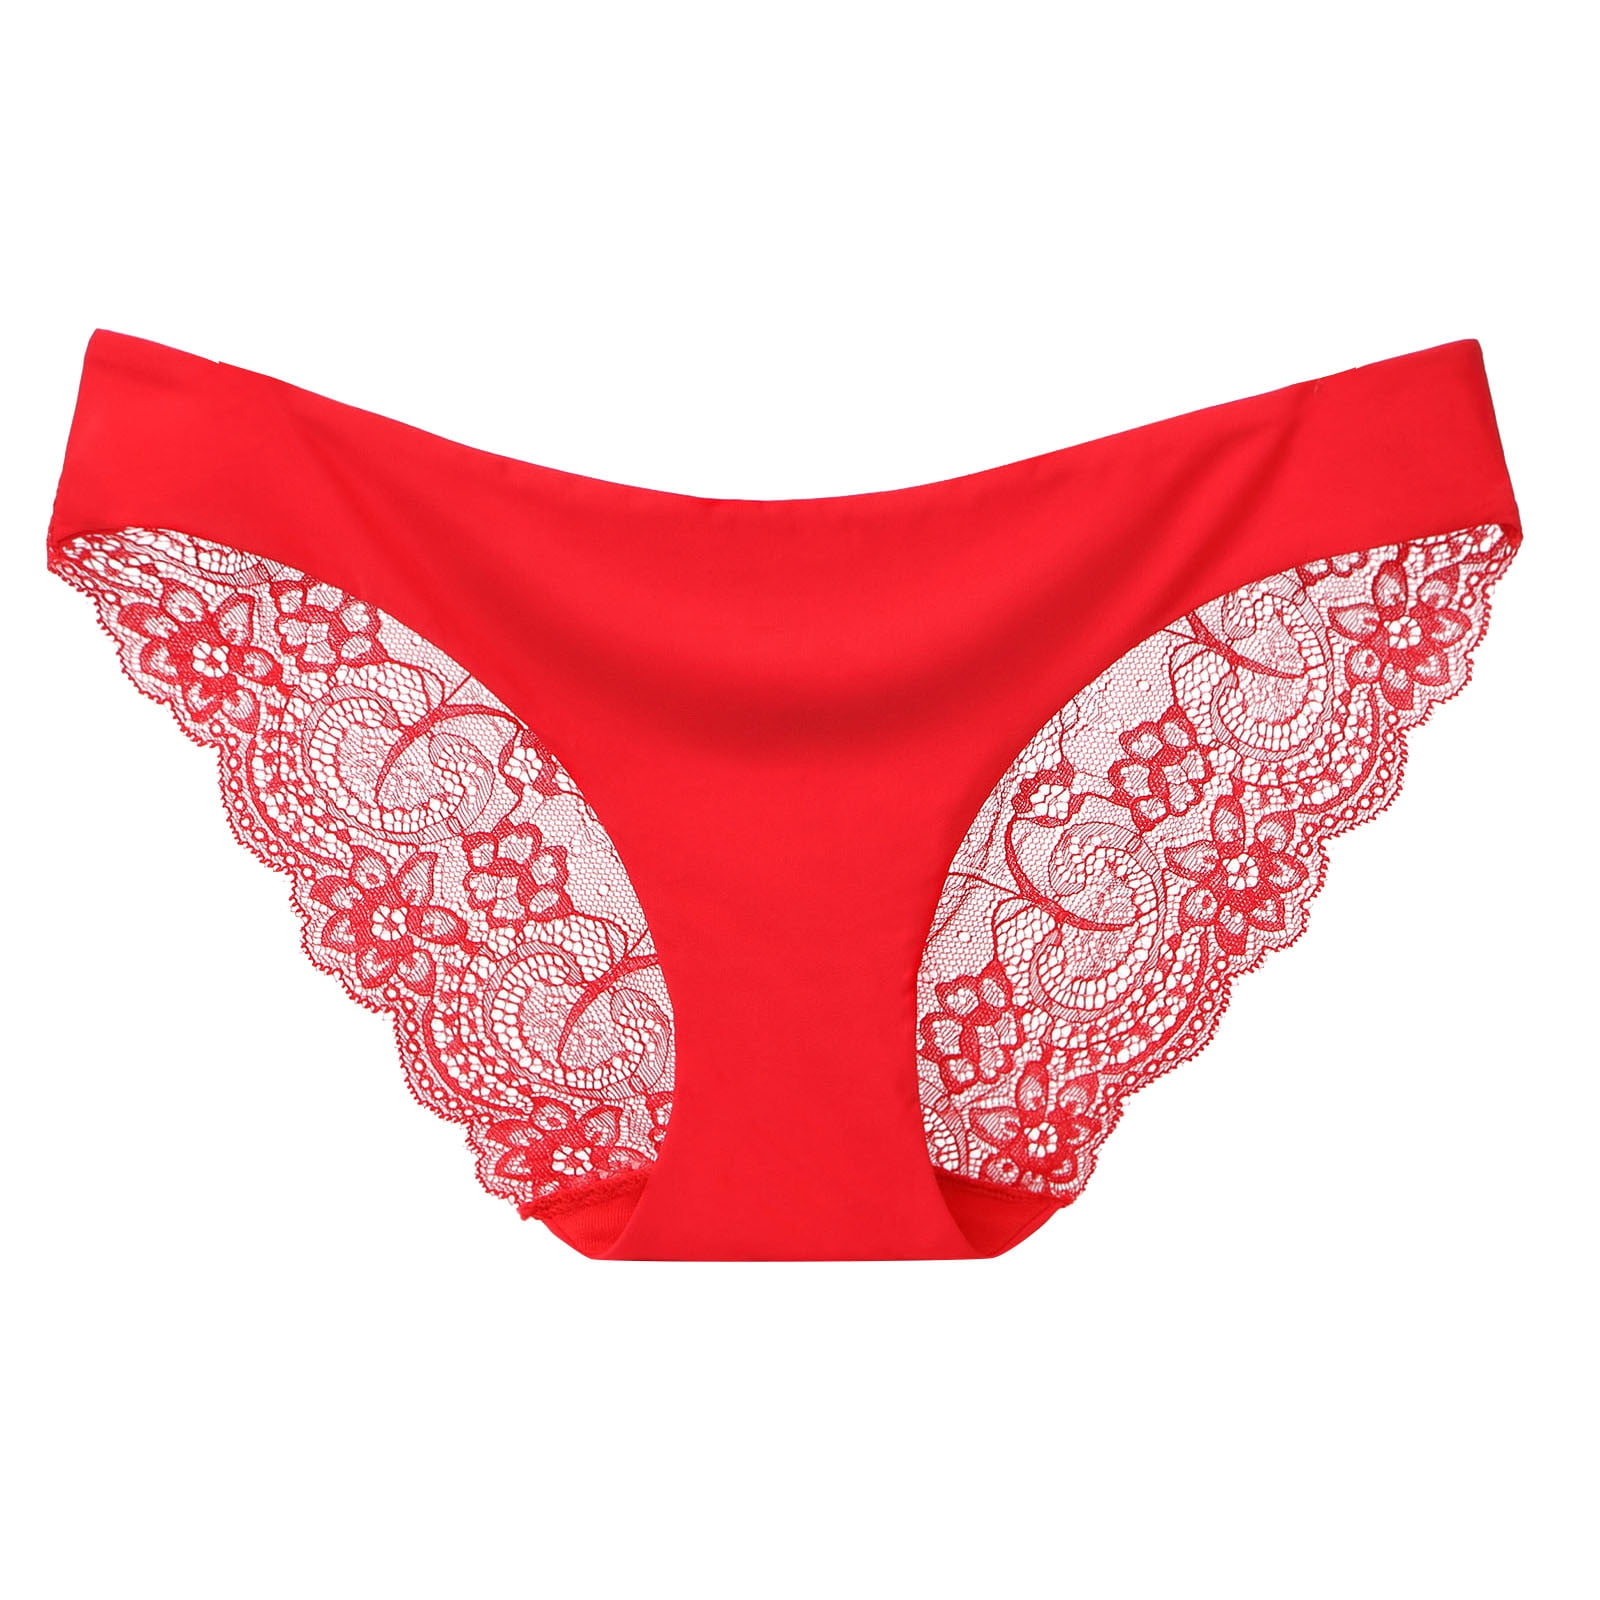 zuwimk Panties For Women Thong,Women's Low Rise Underwear Y